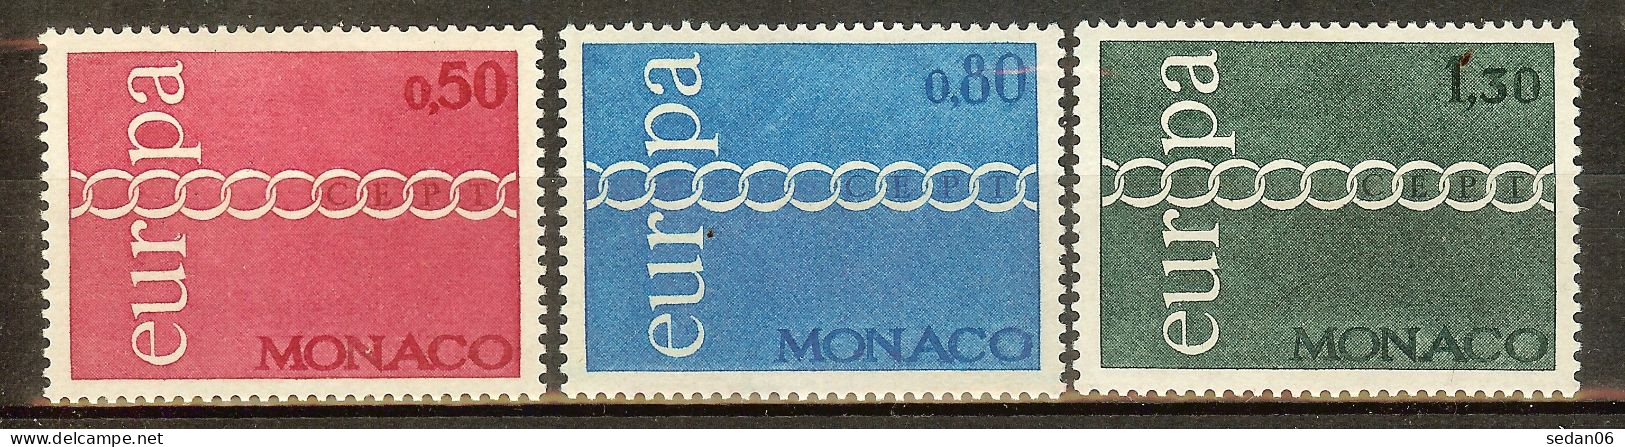 MONACO N°863/865* (Europa 1971) - COTE 16.00 € - 1971